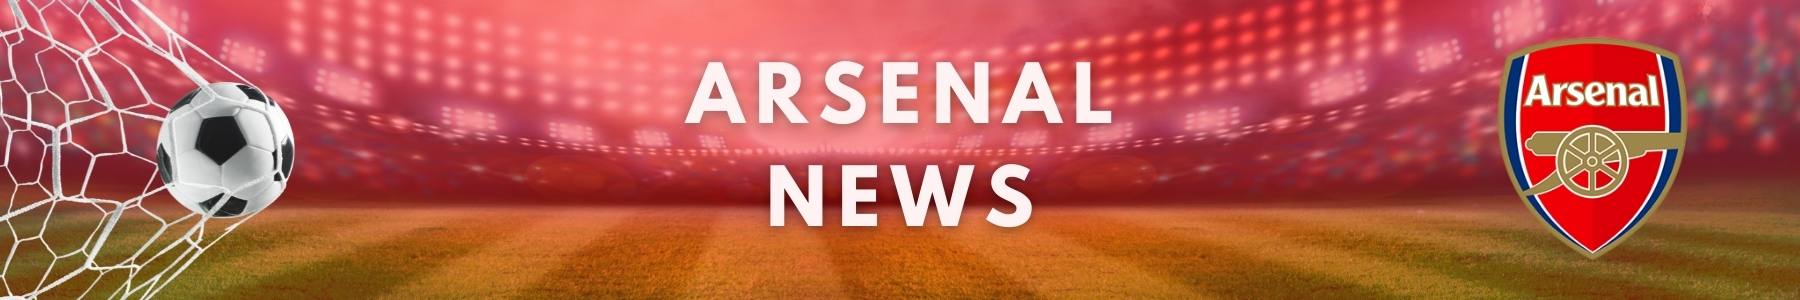 Arsenal - Latest News